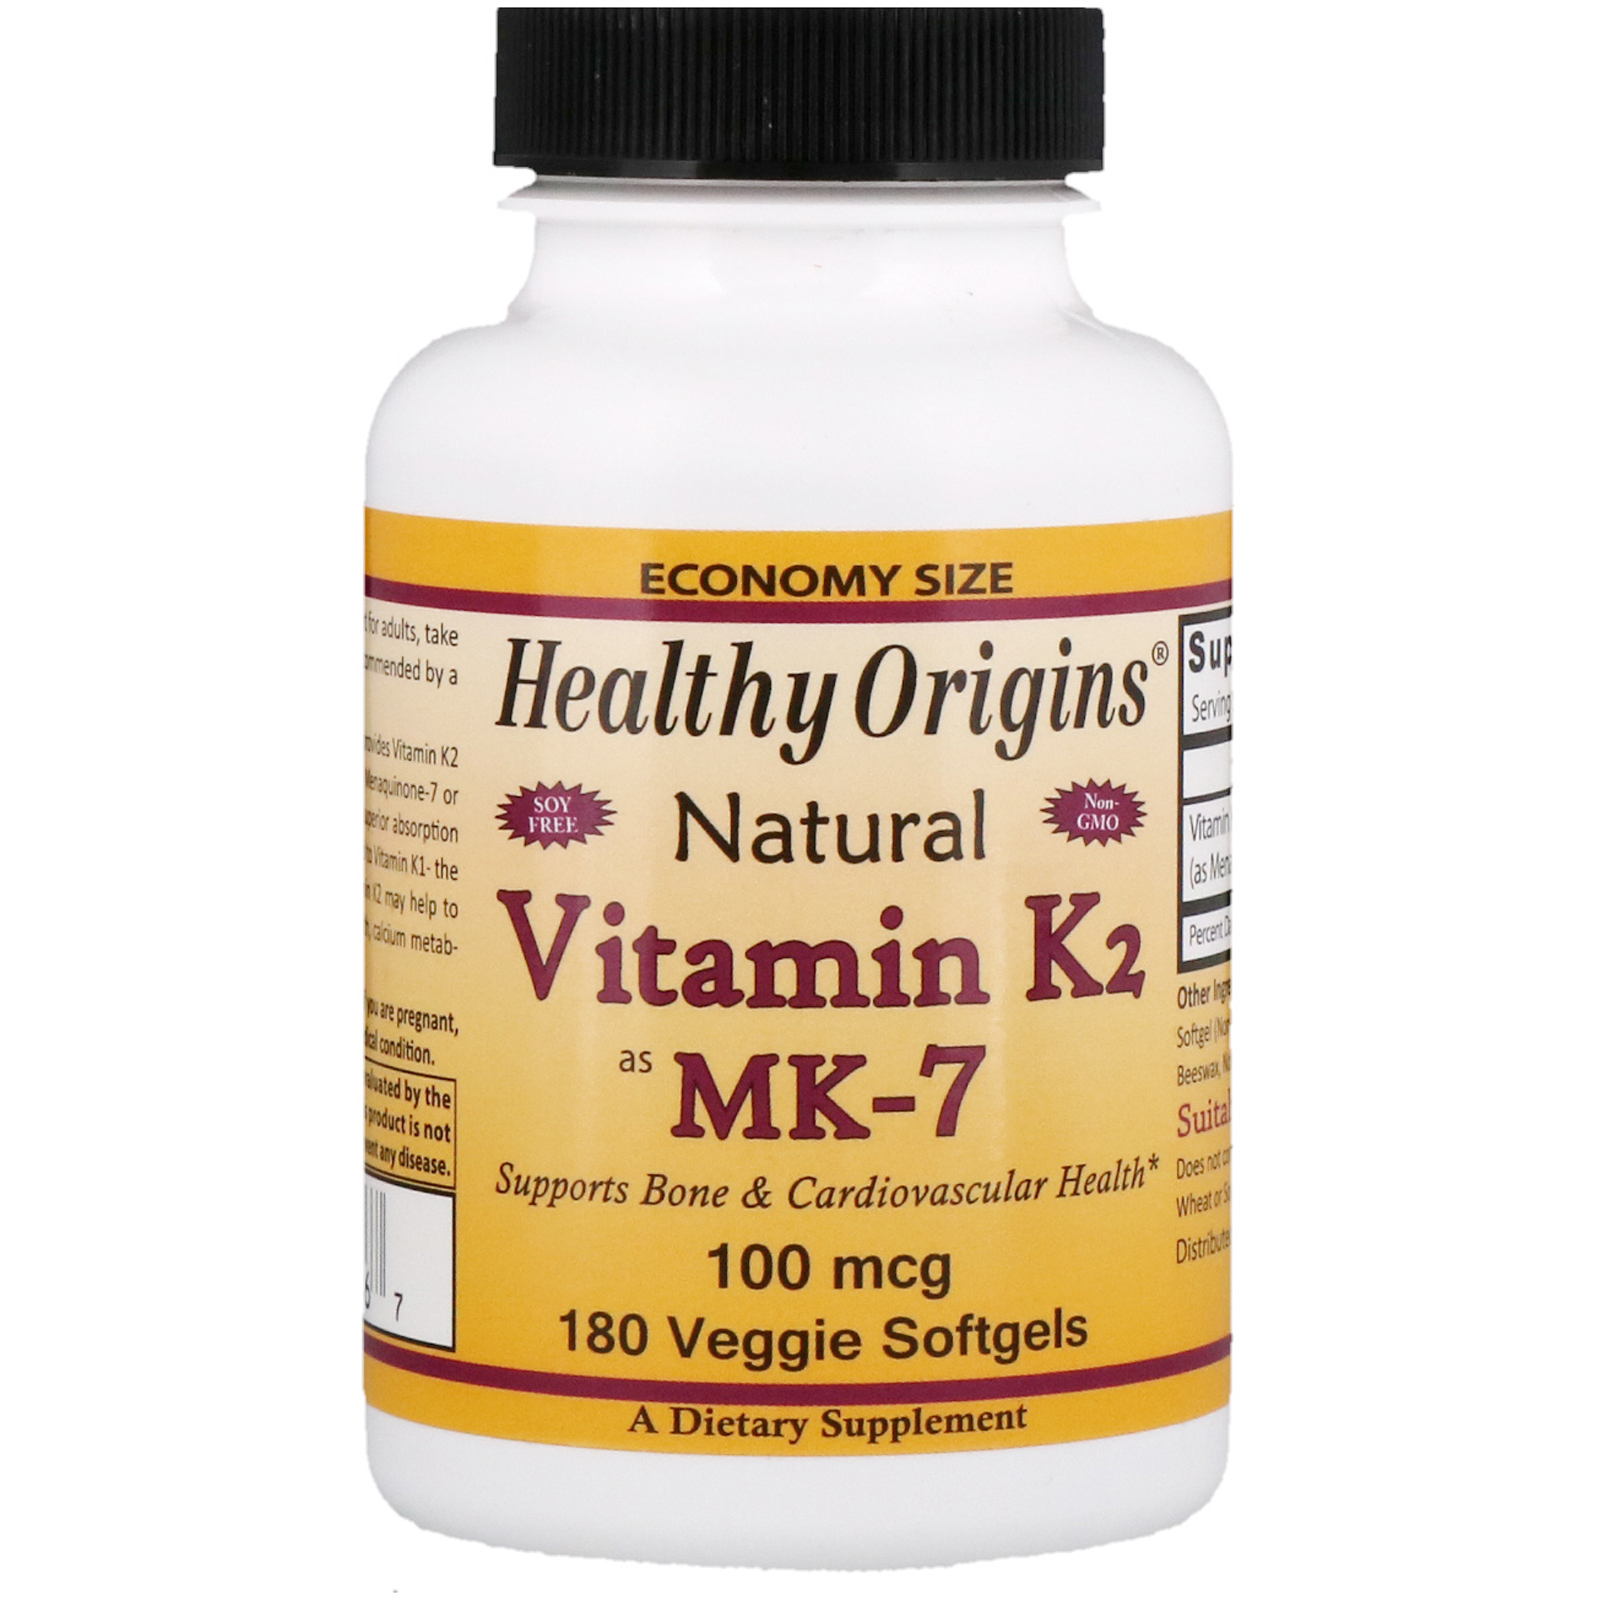 Healthy Origins Vitamin K2 As Mk 7 Natural 100 Mcg 180